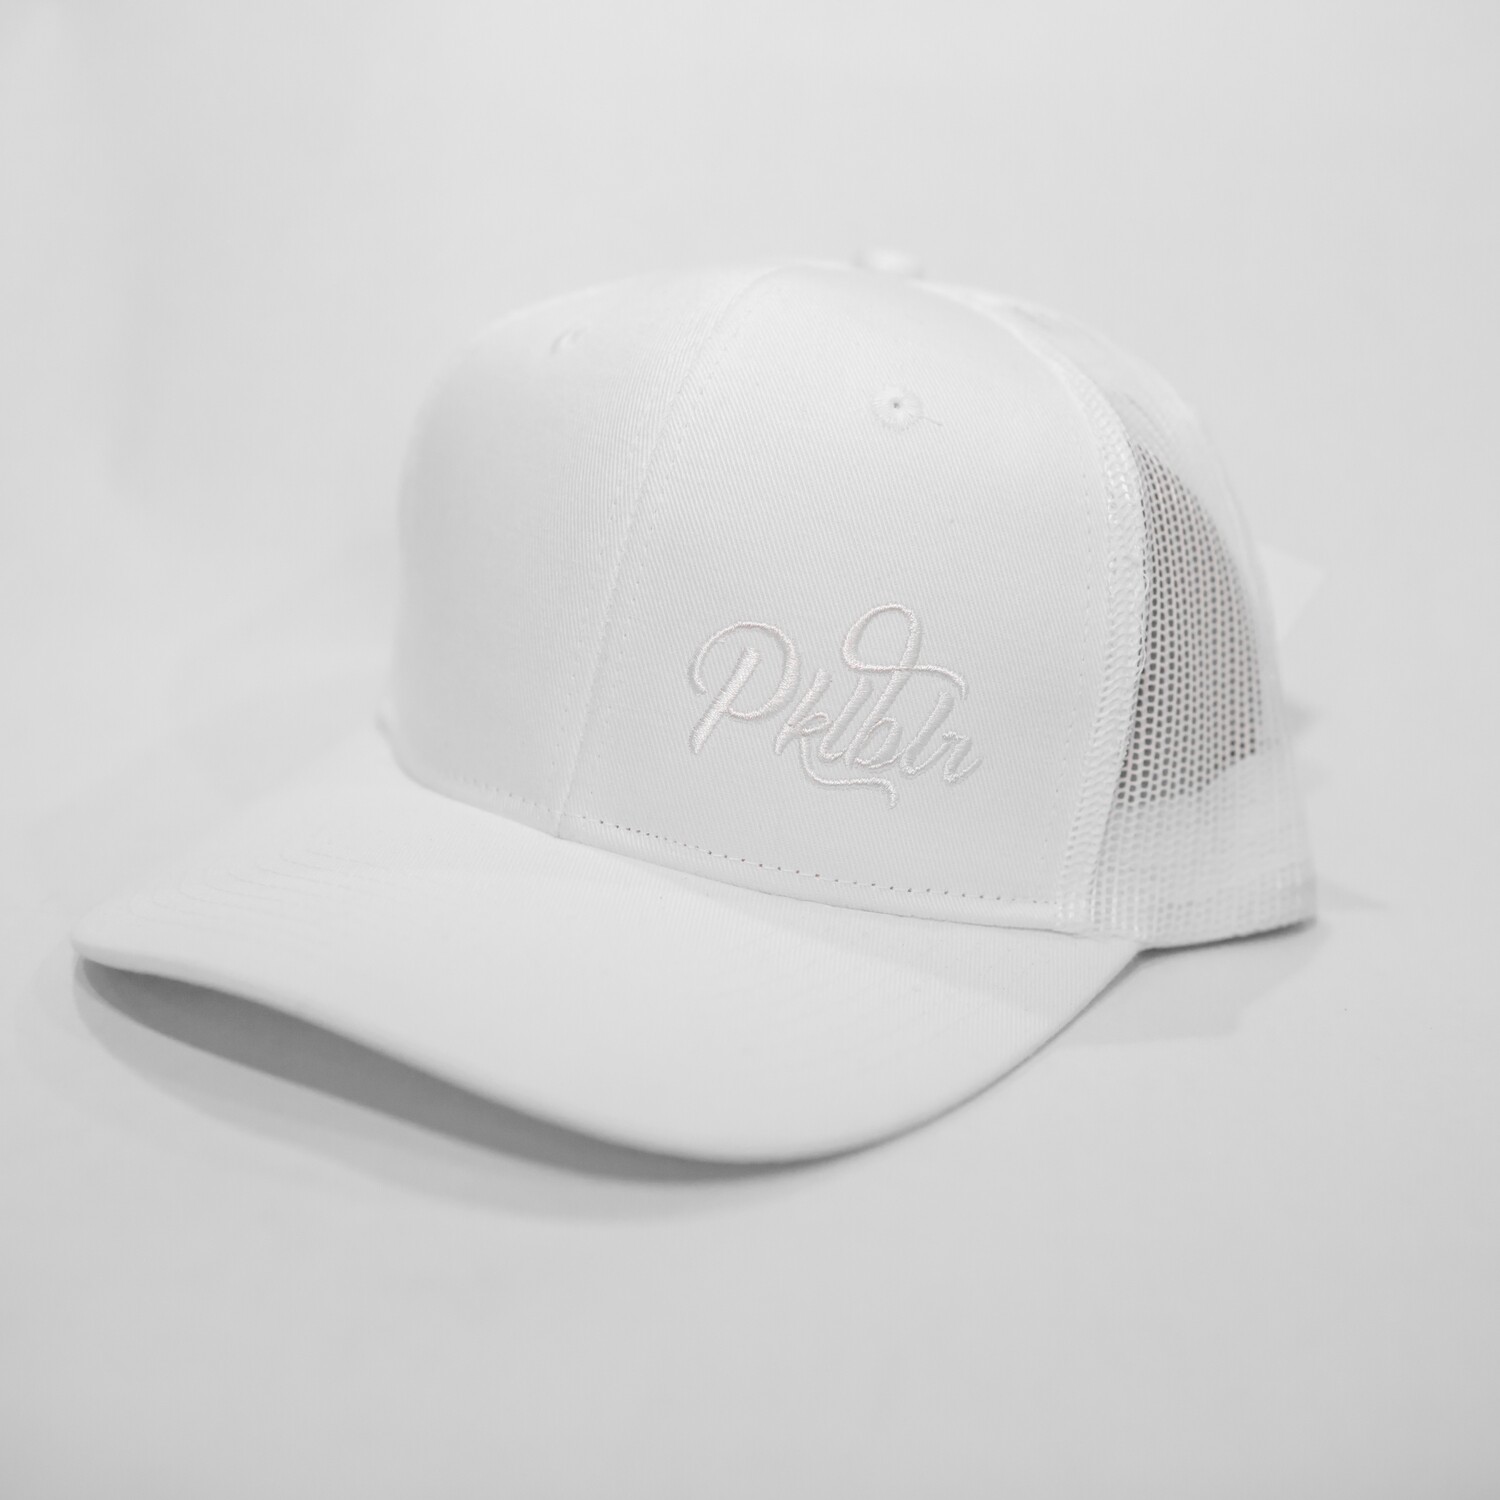 Pickleball Trucker Hat with Script Logo